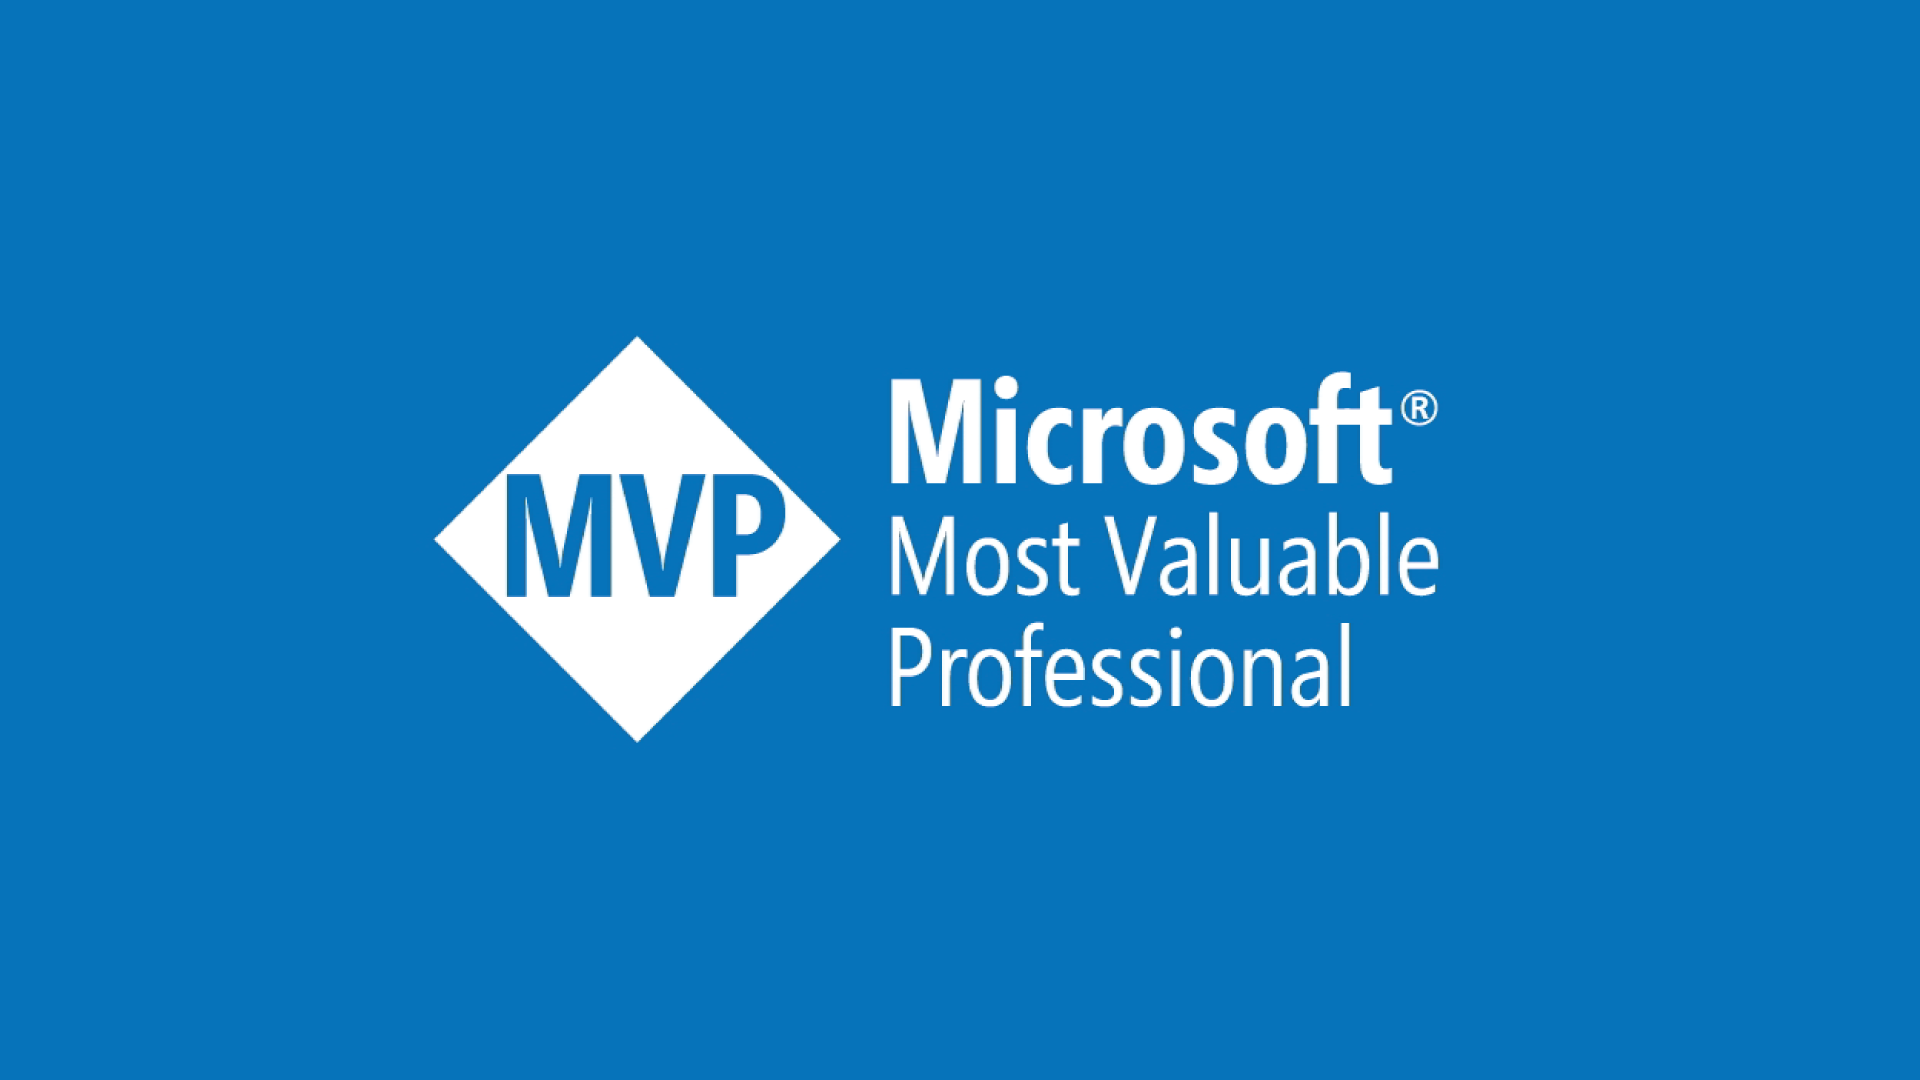 Becoming a Microsoft MVP